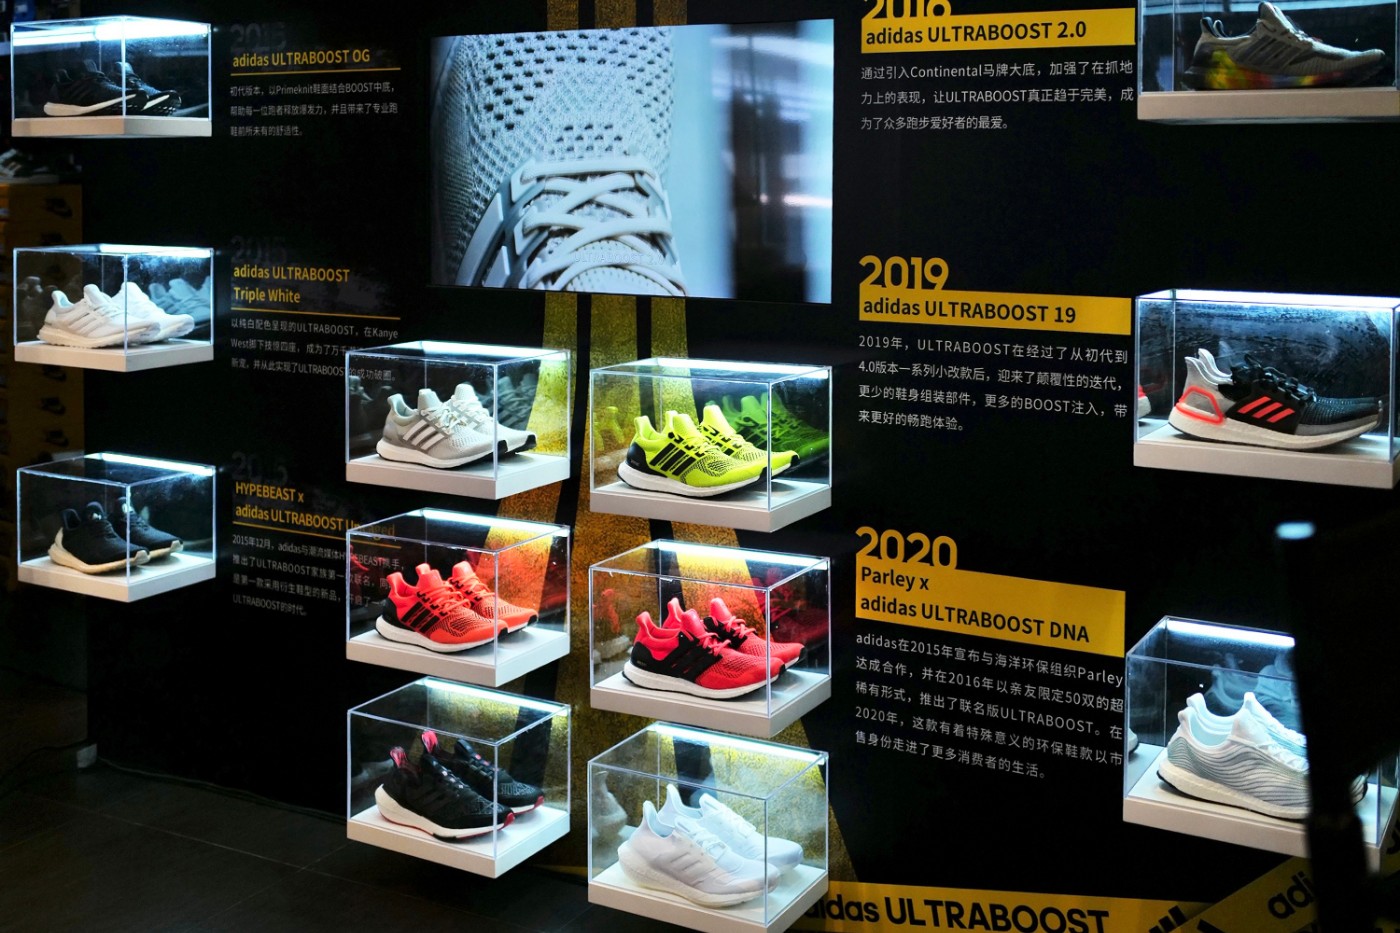 adidas,Ultraboost  横跨运动与潮流两届！阿迪达斯 ULTRABOOST 主题展览回顾！